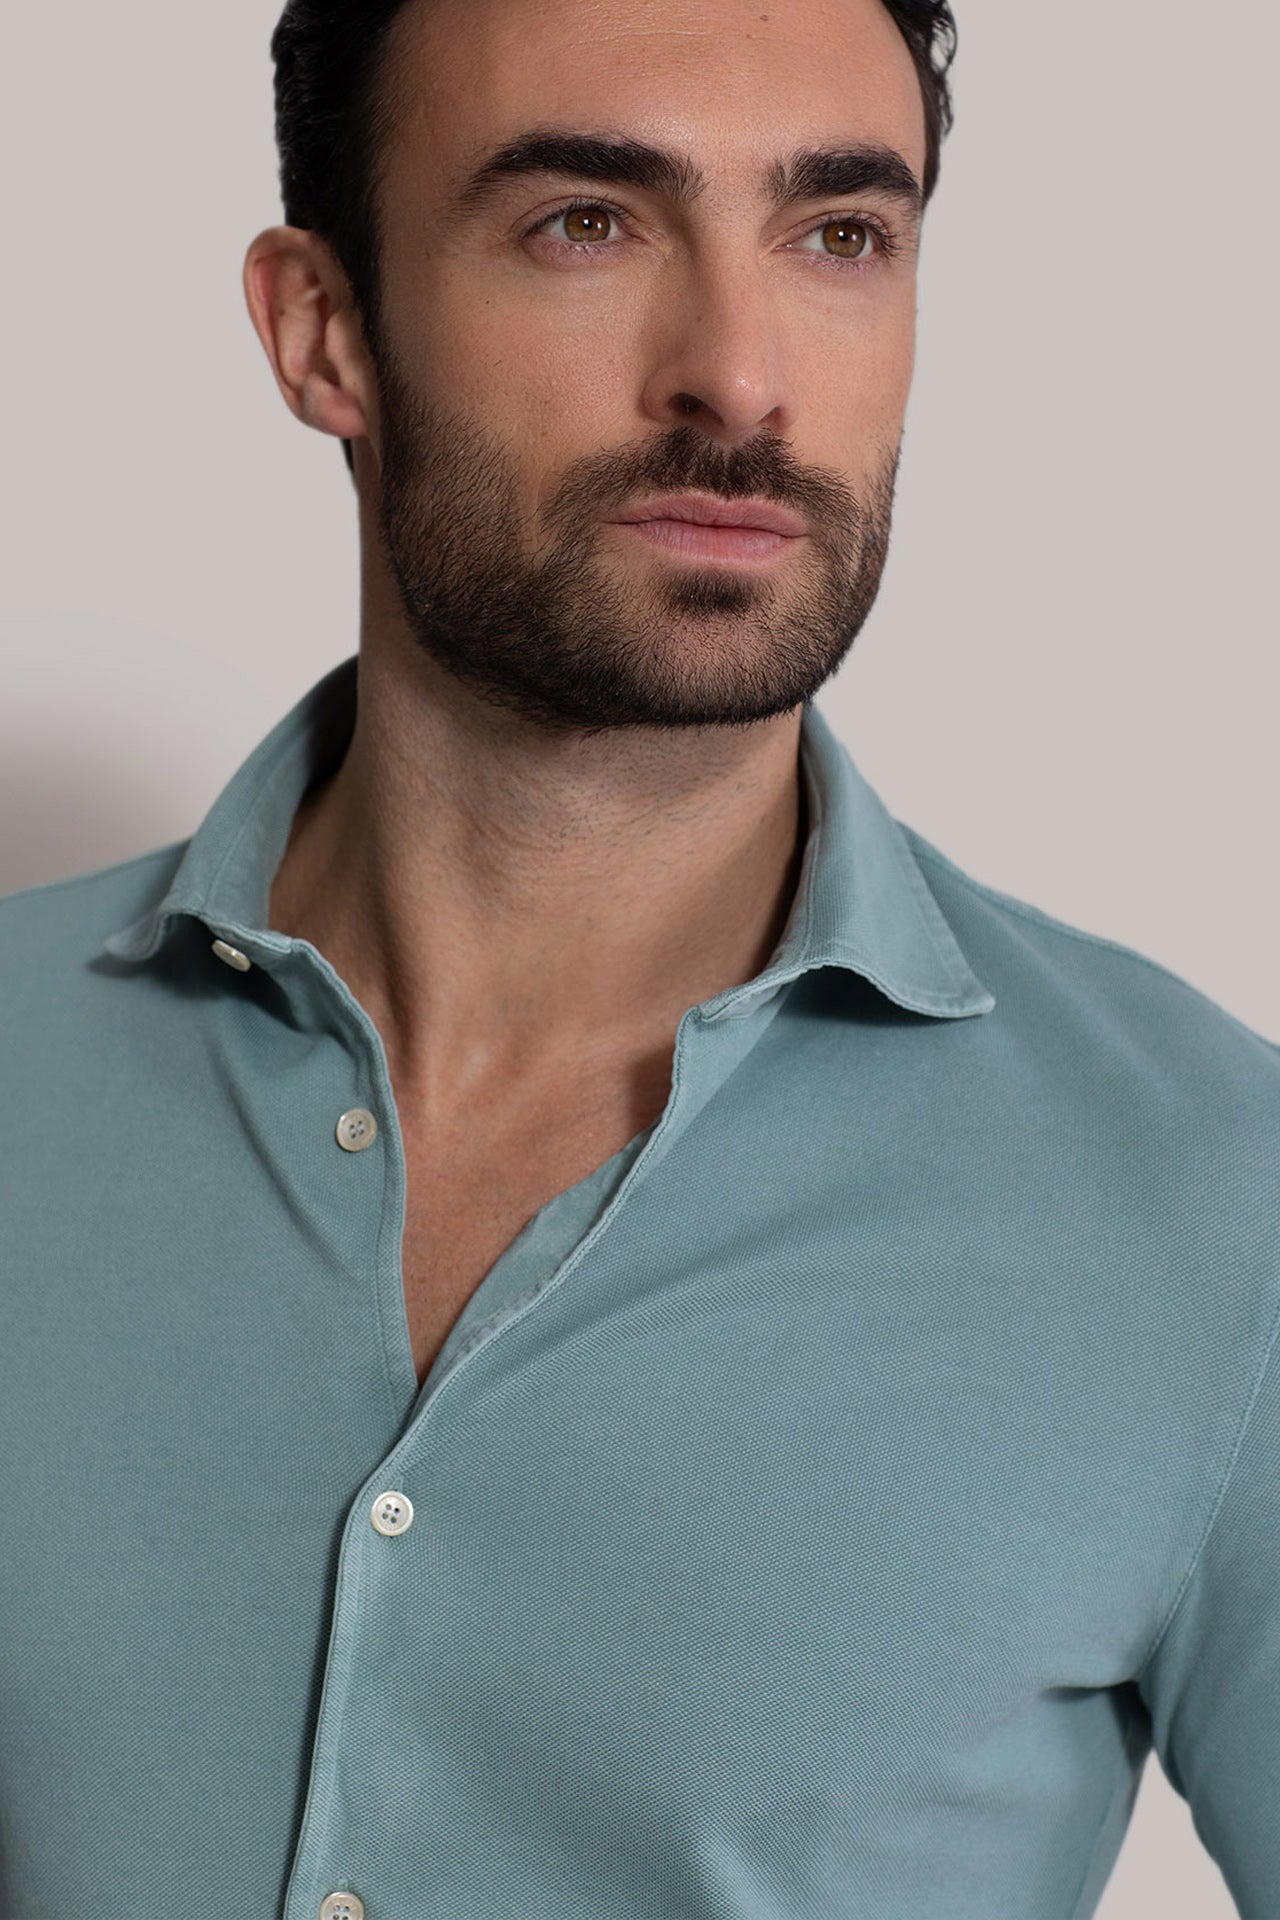 Men's designer shirt in organic cotton: sea green